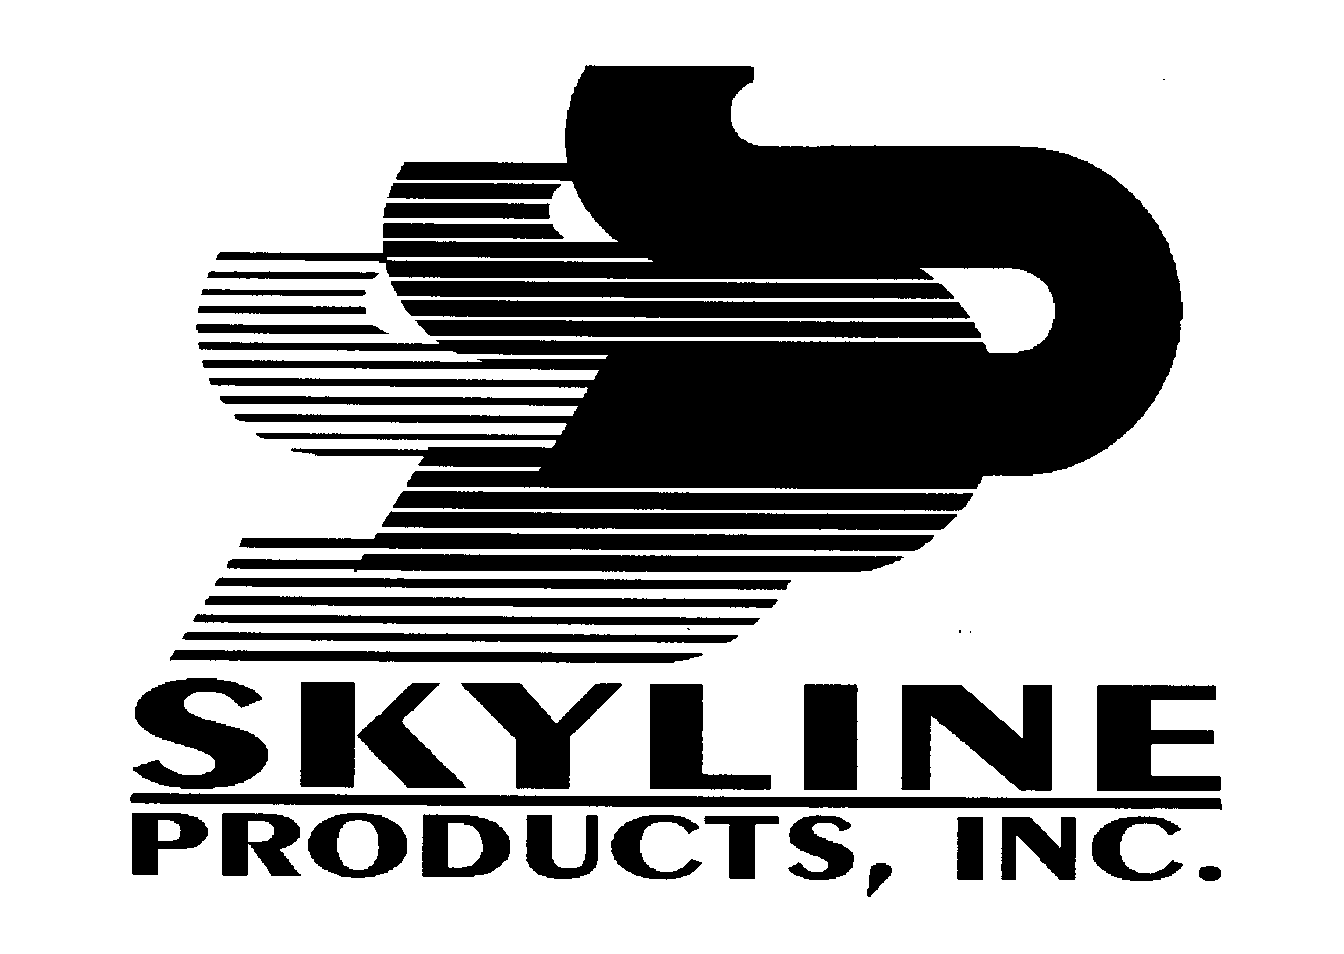  SSS SKYLINE PRODUCTS, INC.